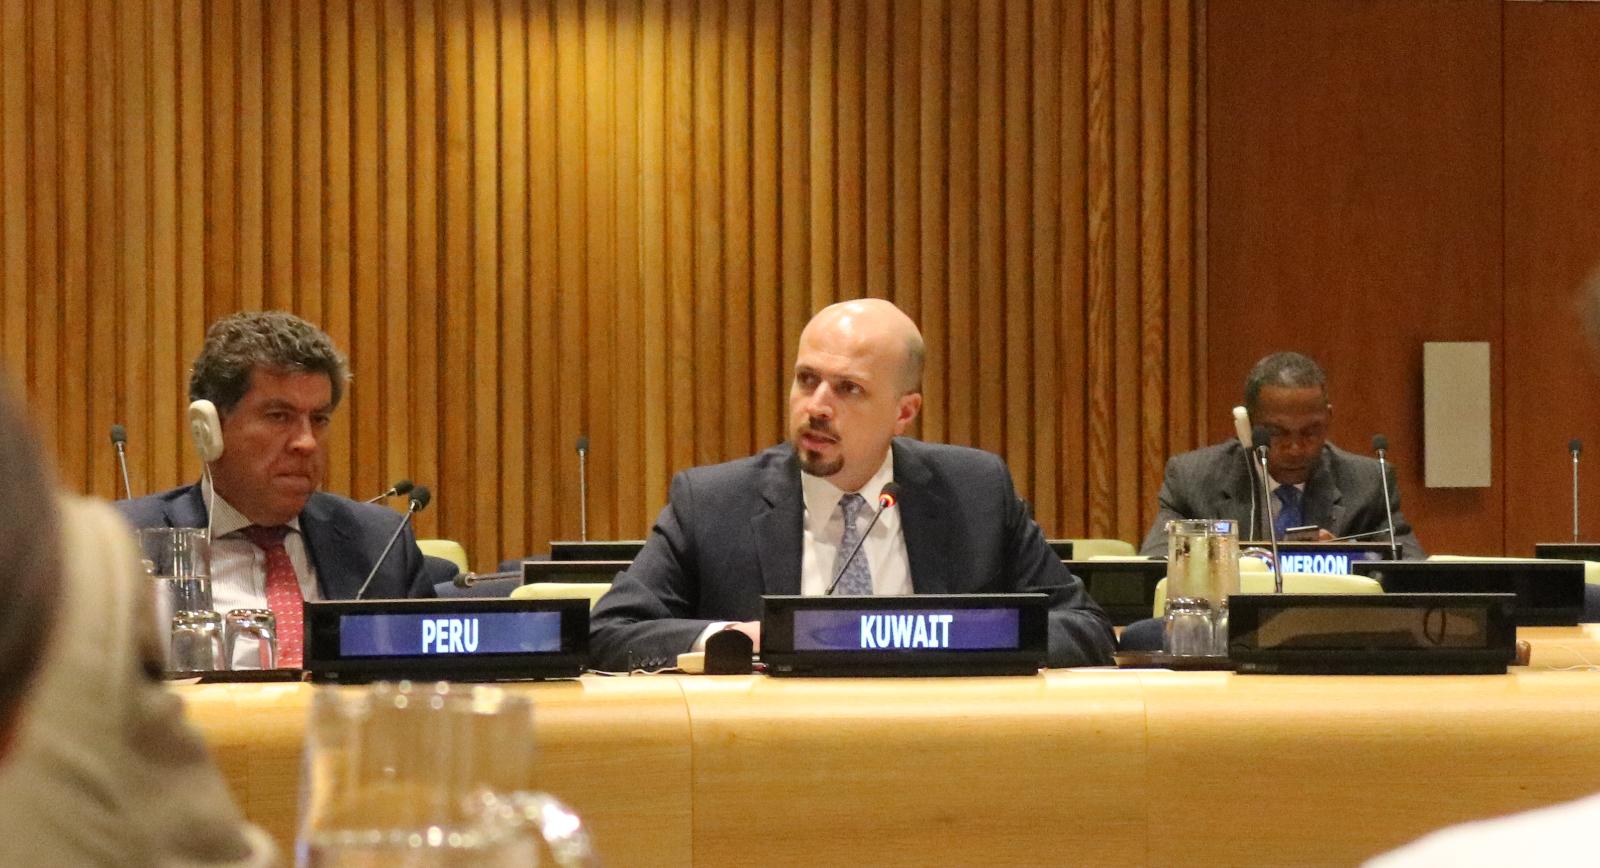 First secretary of the Kuwaiti UN mission in New York Fawaz Bourseli